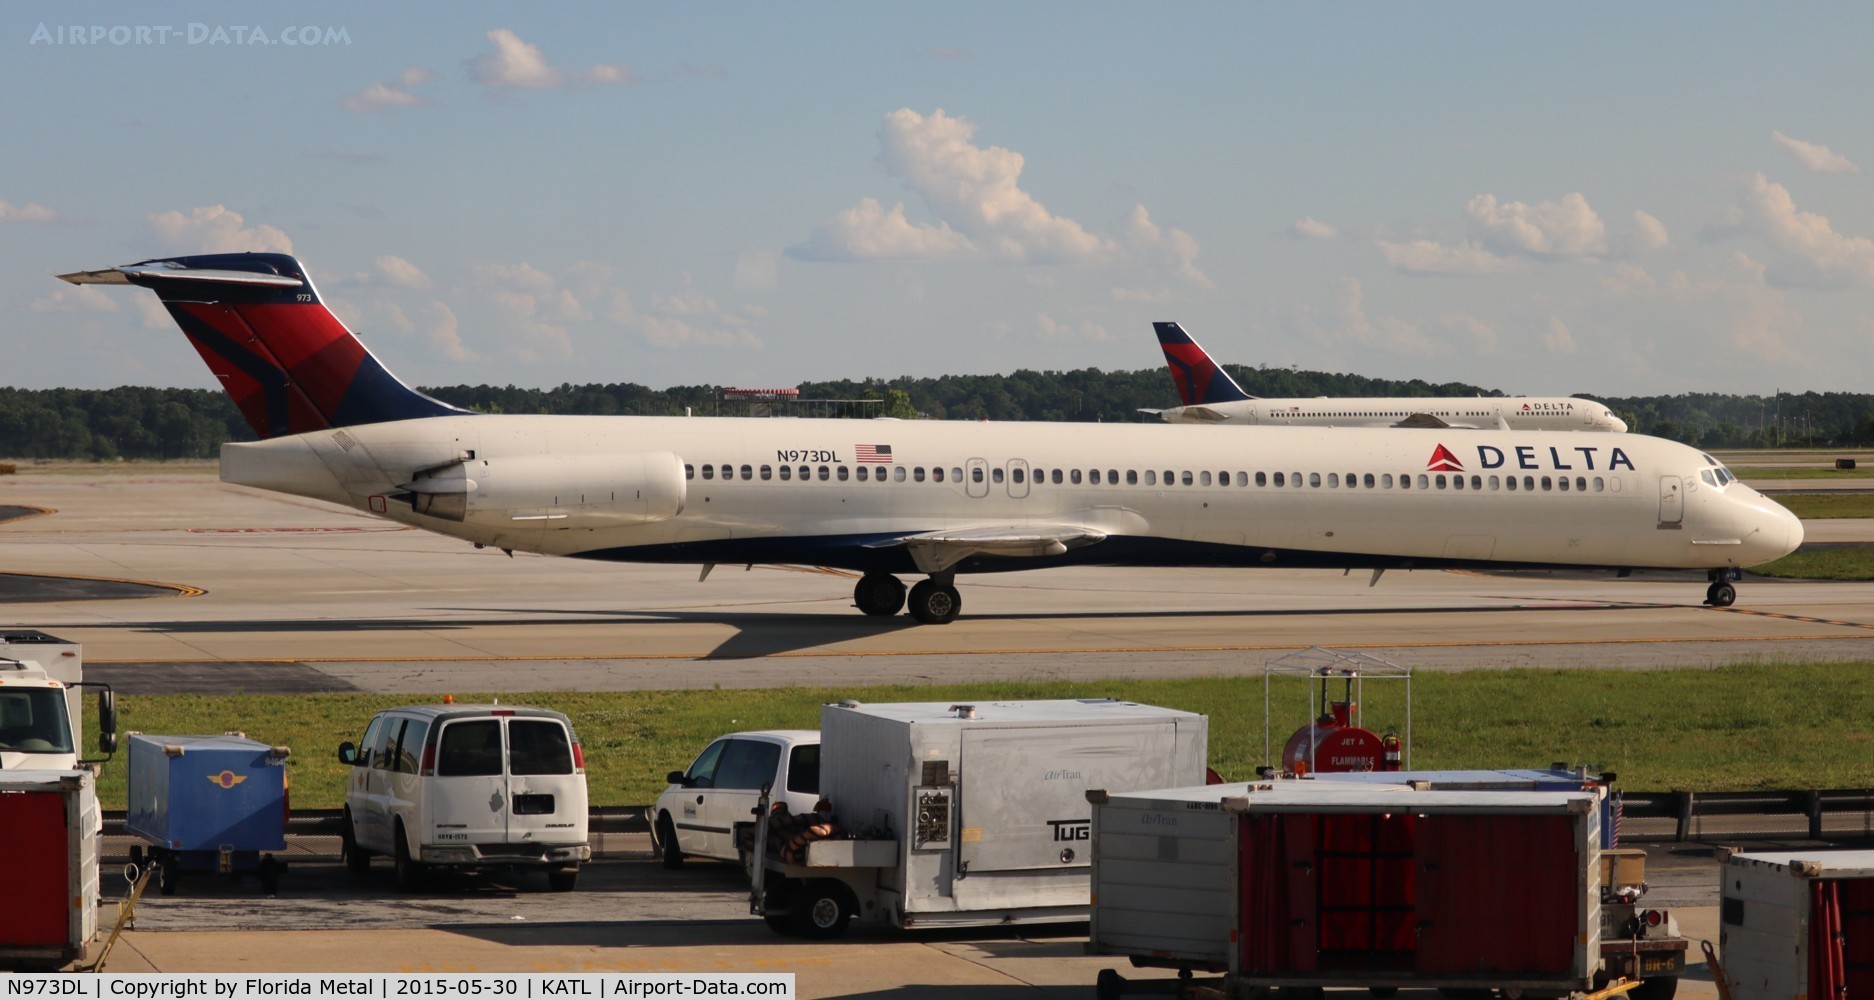 N973DL, 1991 McDonnell Douglas MD-88 C/N 53241, ATL spotting 2015